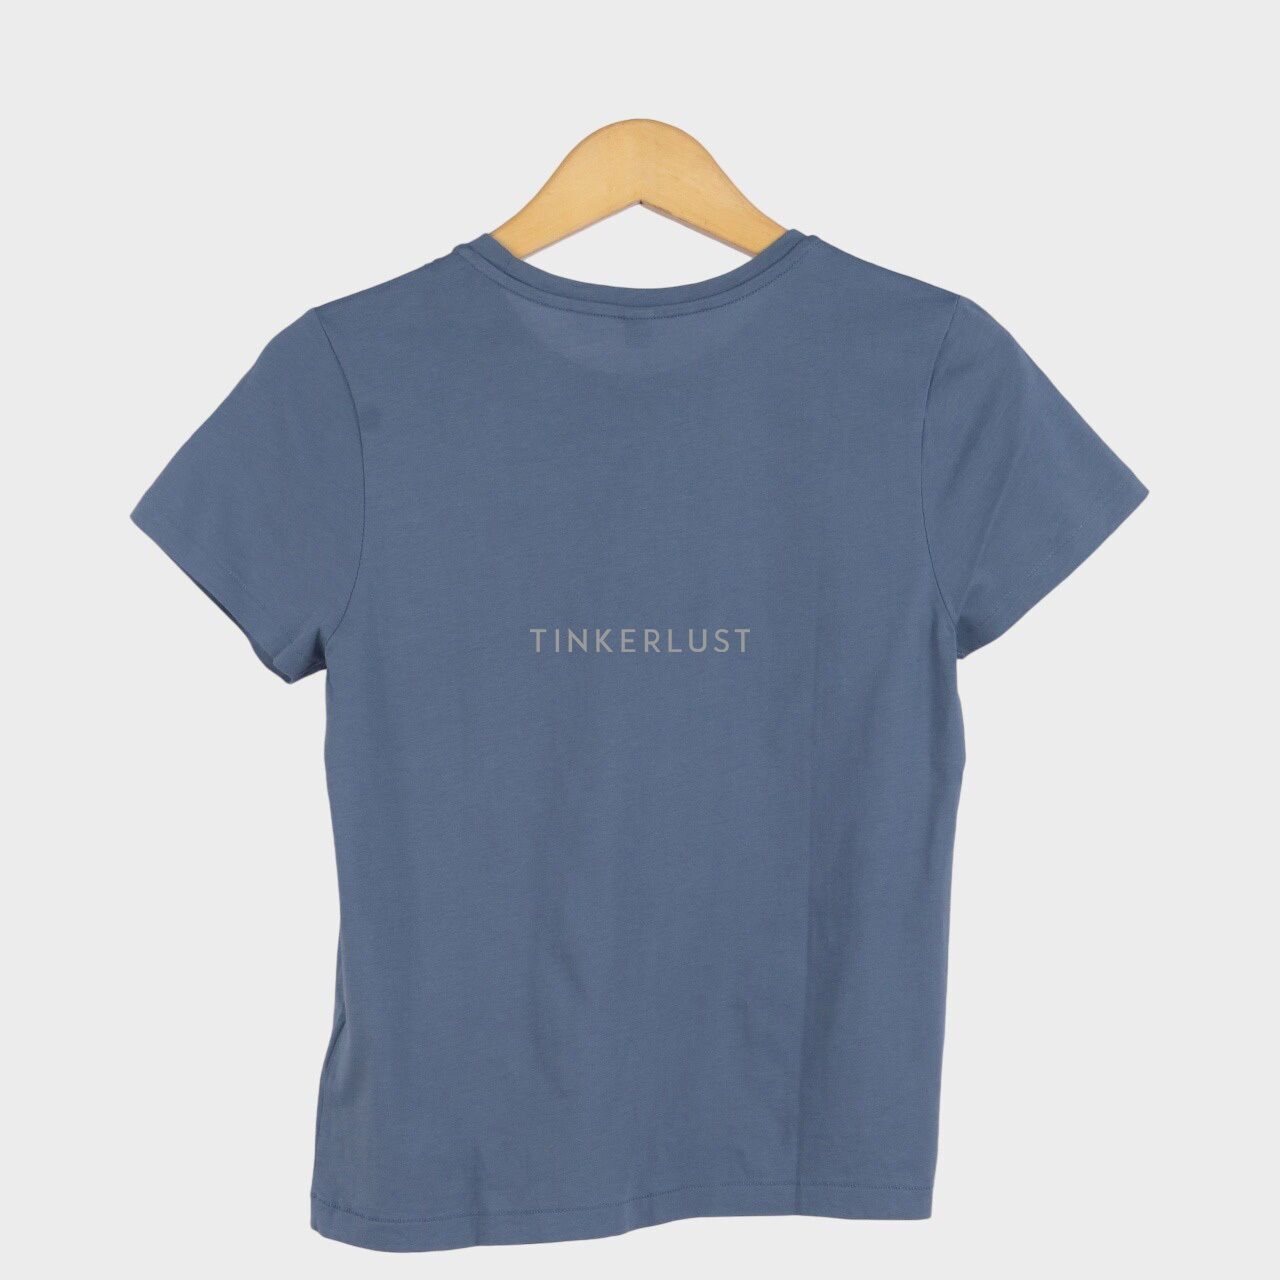 UNIQLO Grey T-Shirt